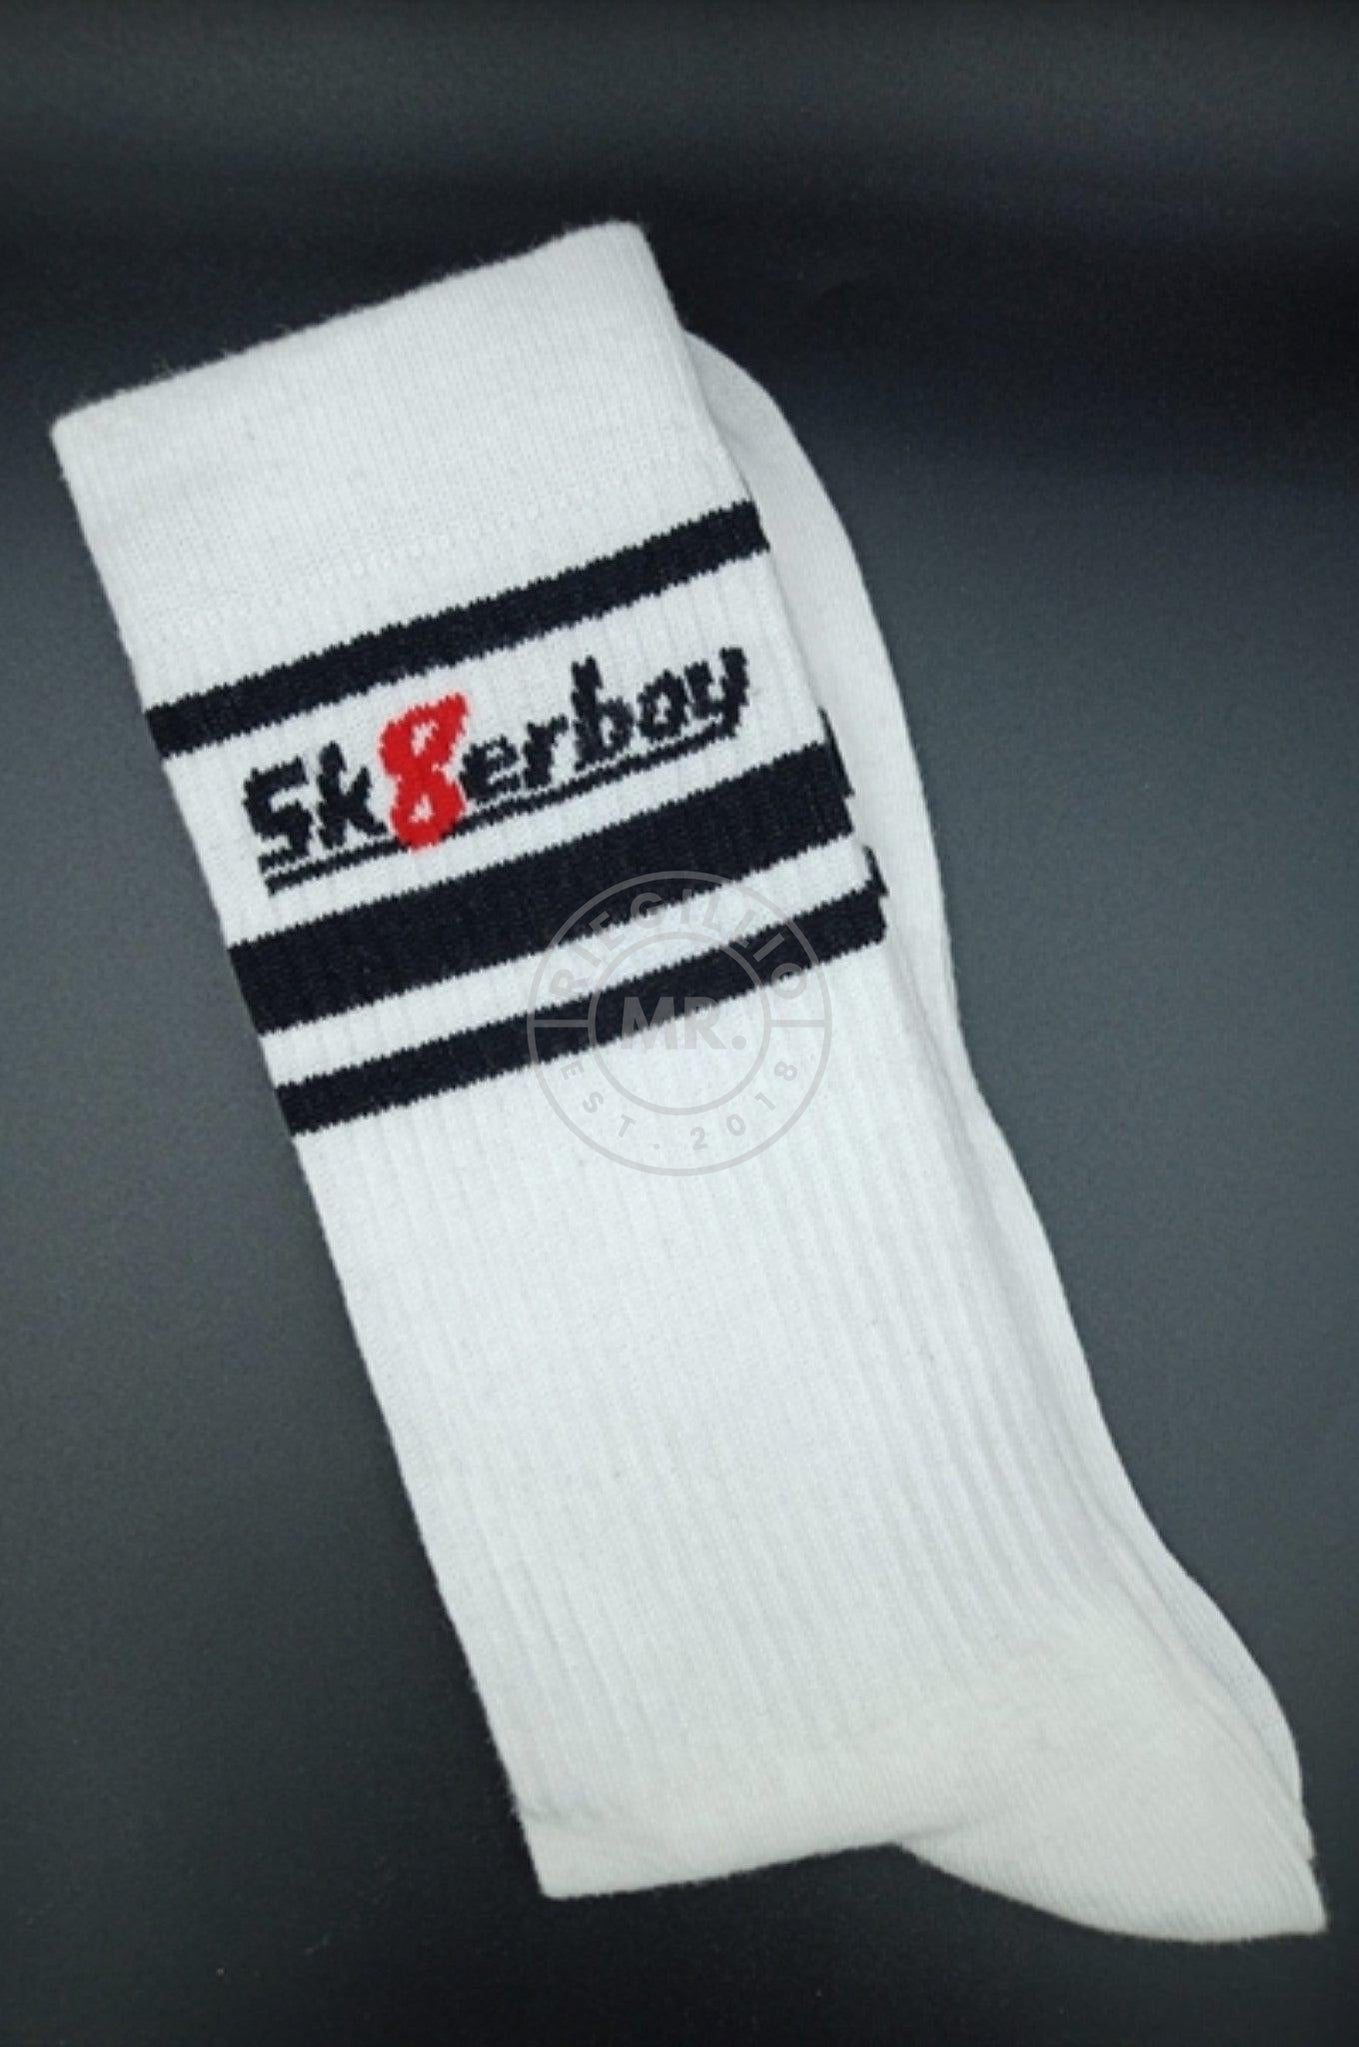 Sk8erboy VICTORY Socks - White *DISCONTINUED ITEM* at MR. Riegillio